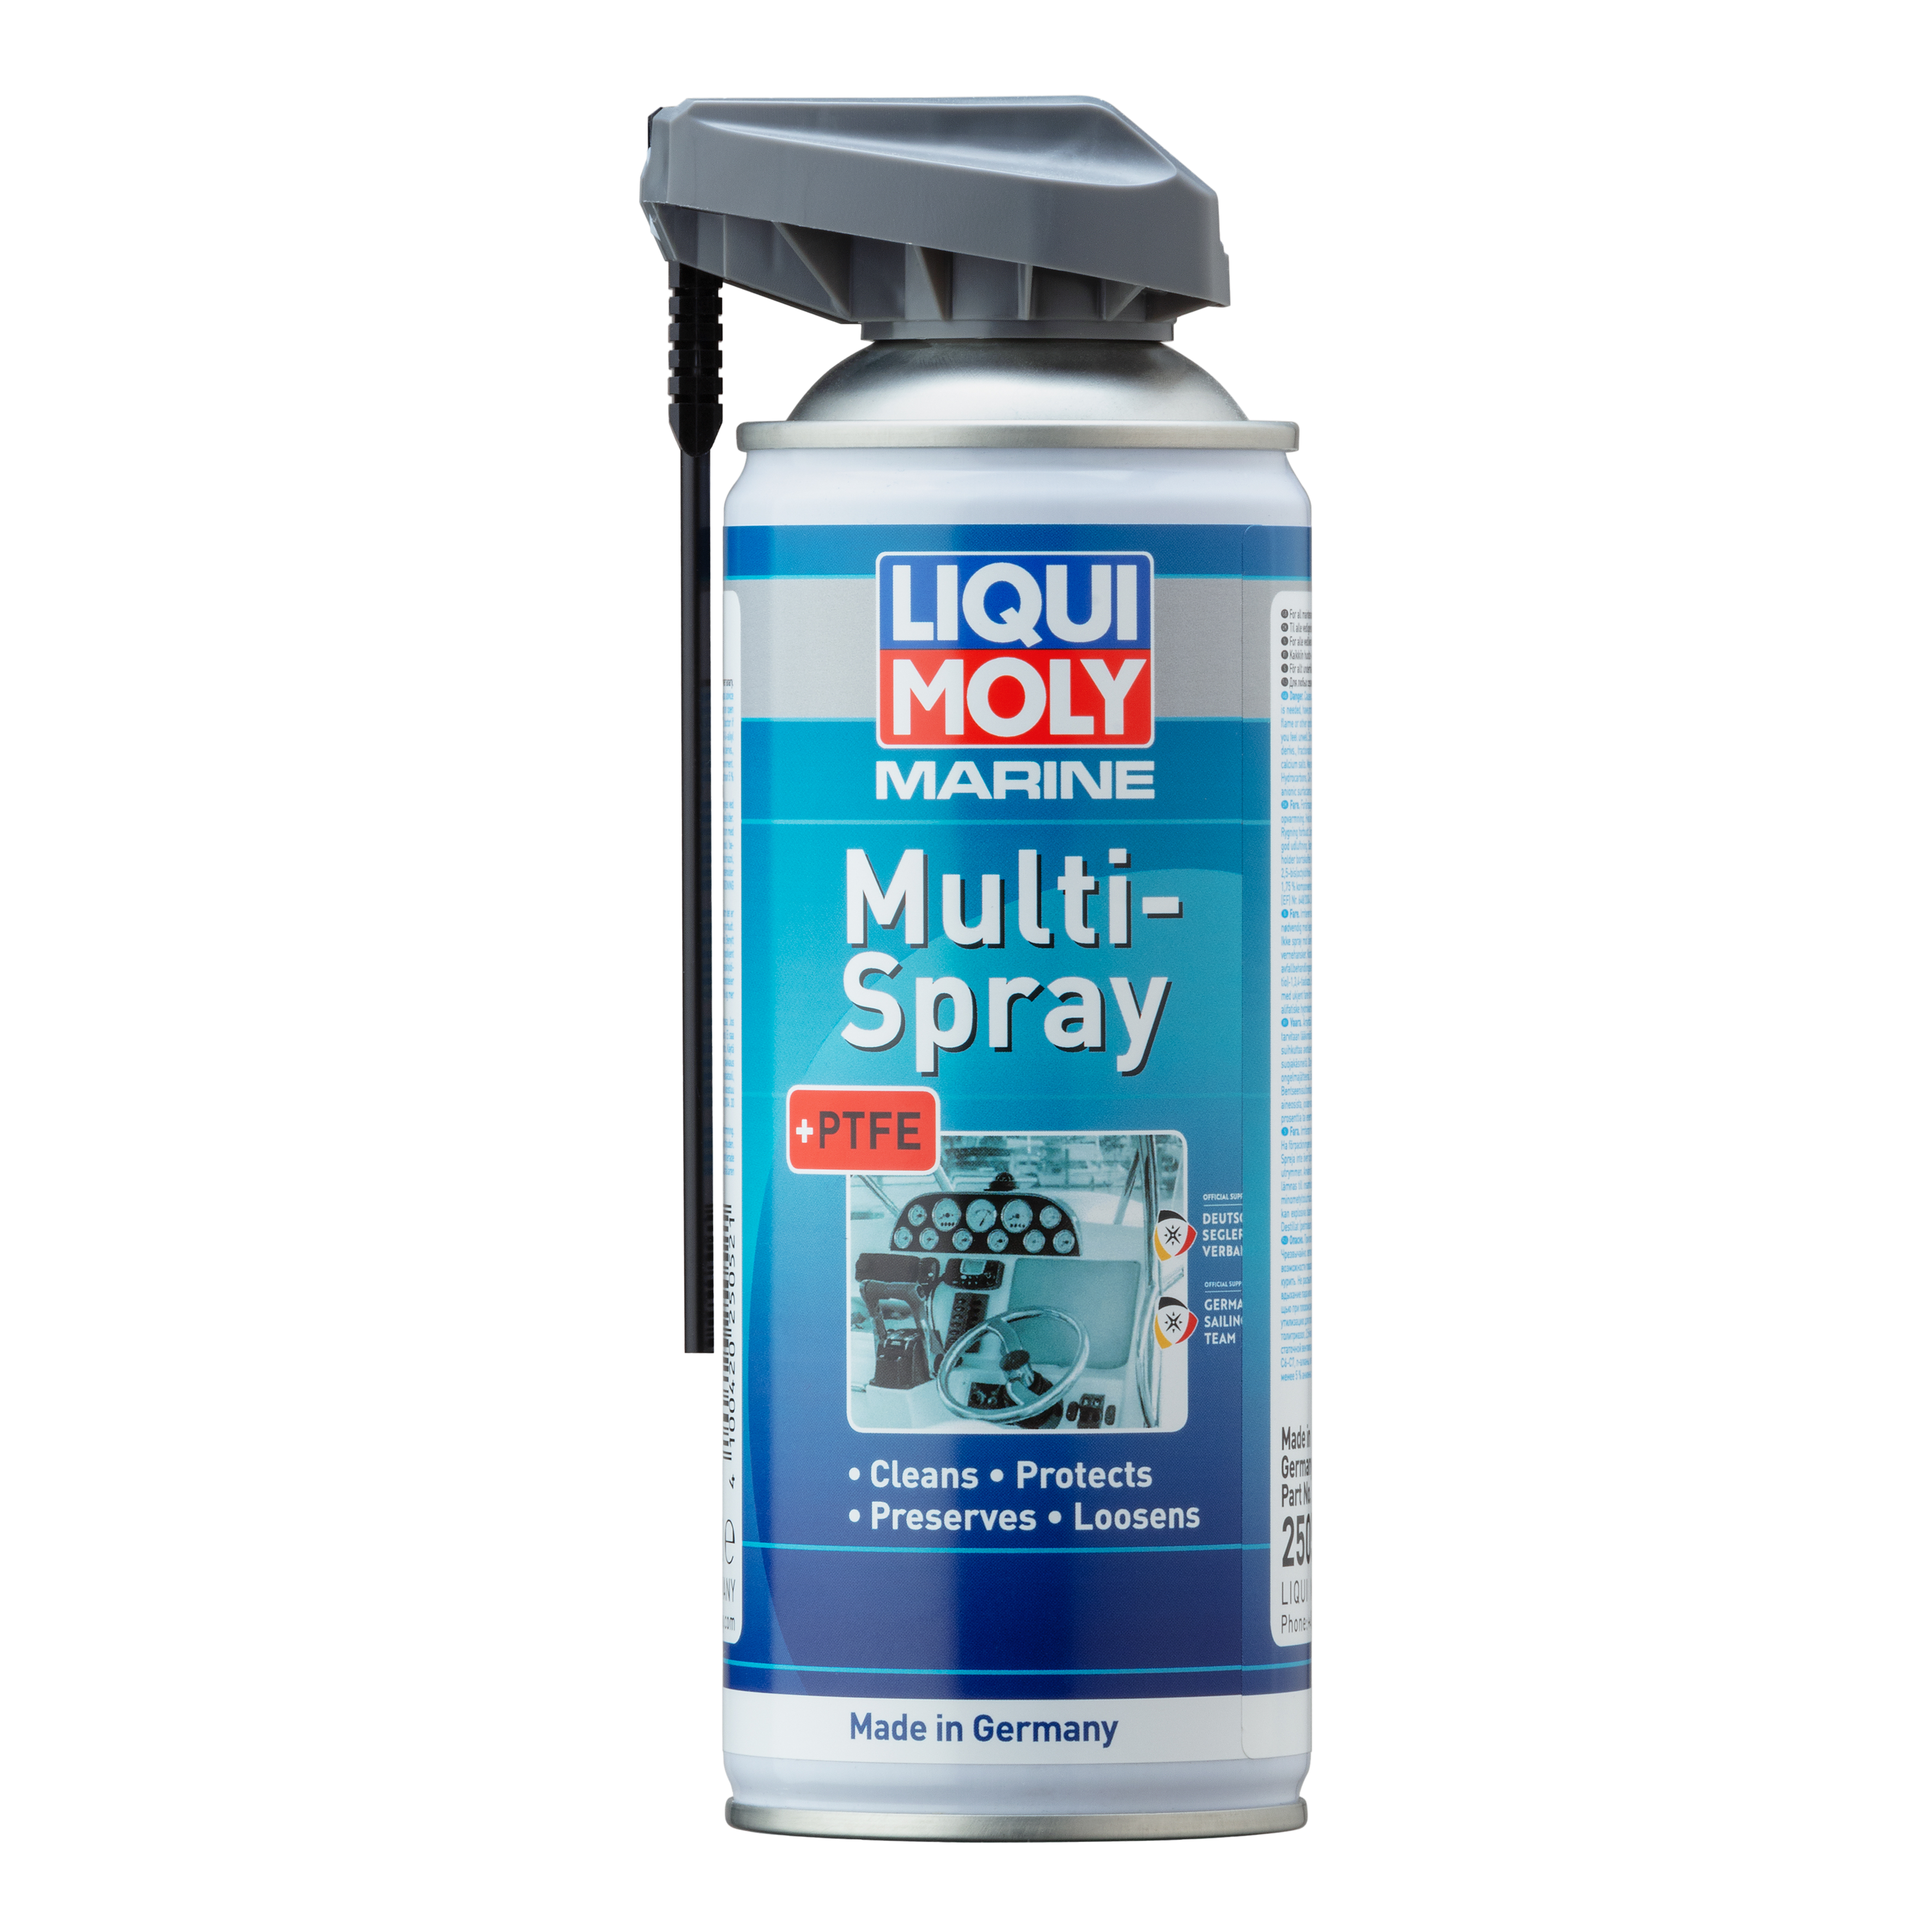 Marine Multispray - LIQUI MOLY